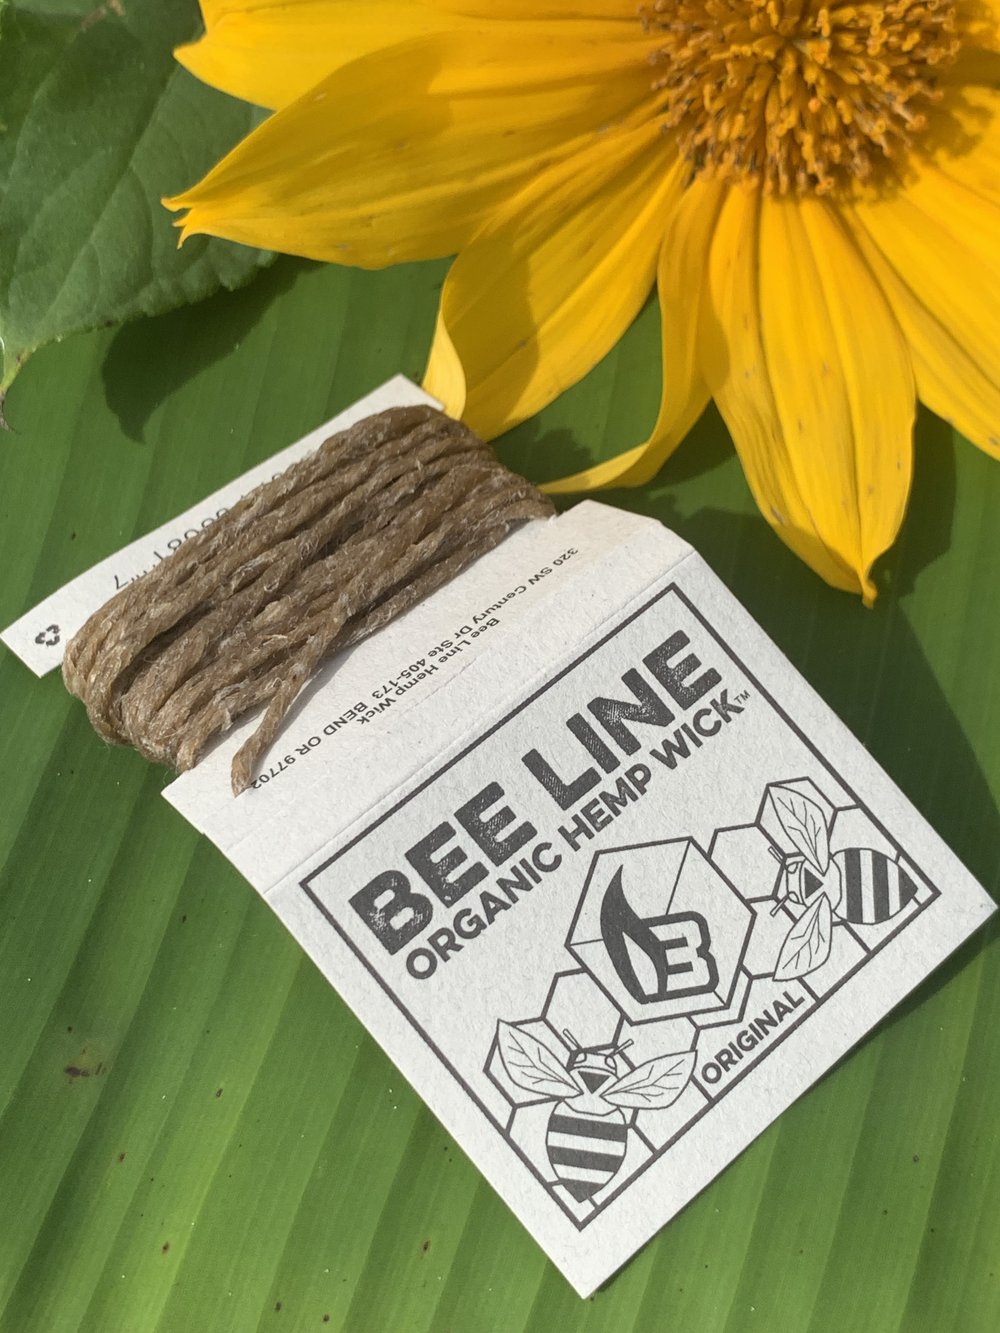 420 Accessories - Hemp Wick - Organic Bees Wax Natural Hemp Roll